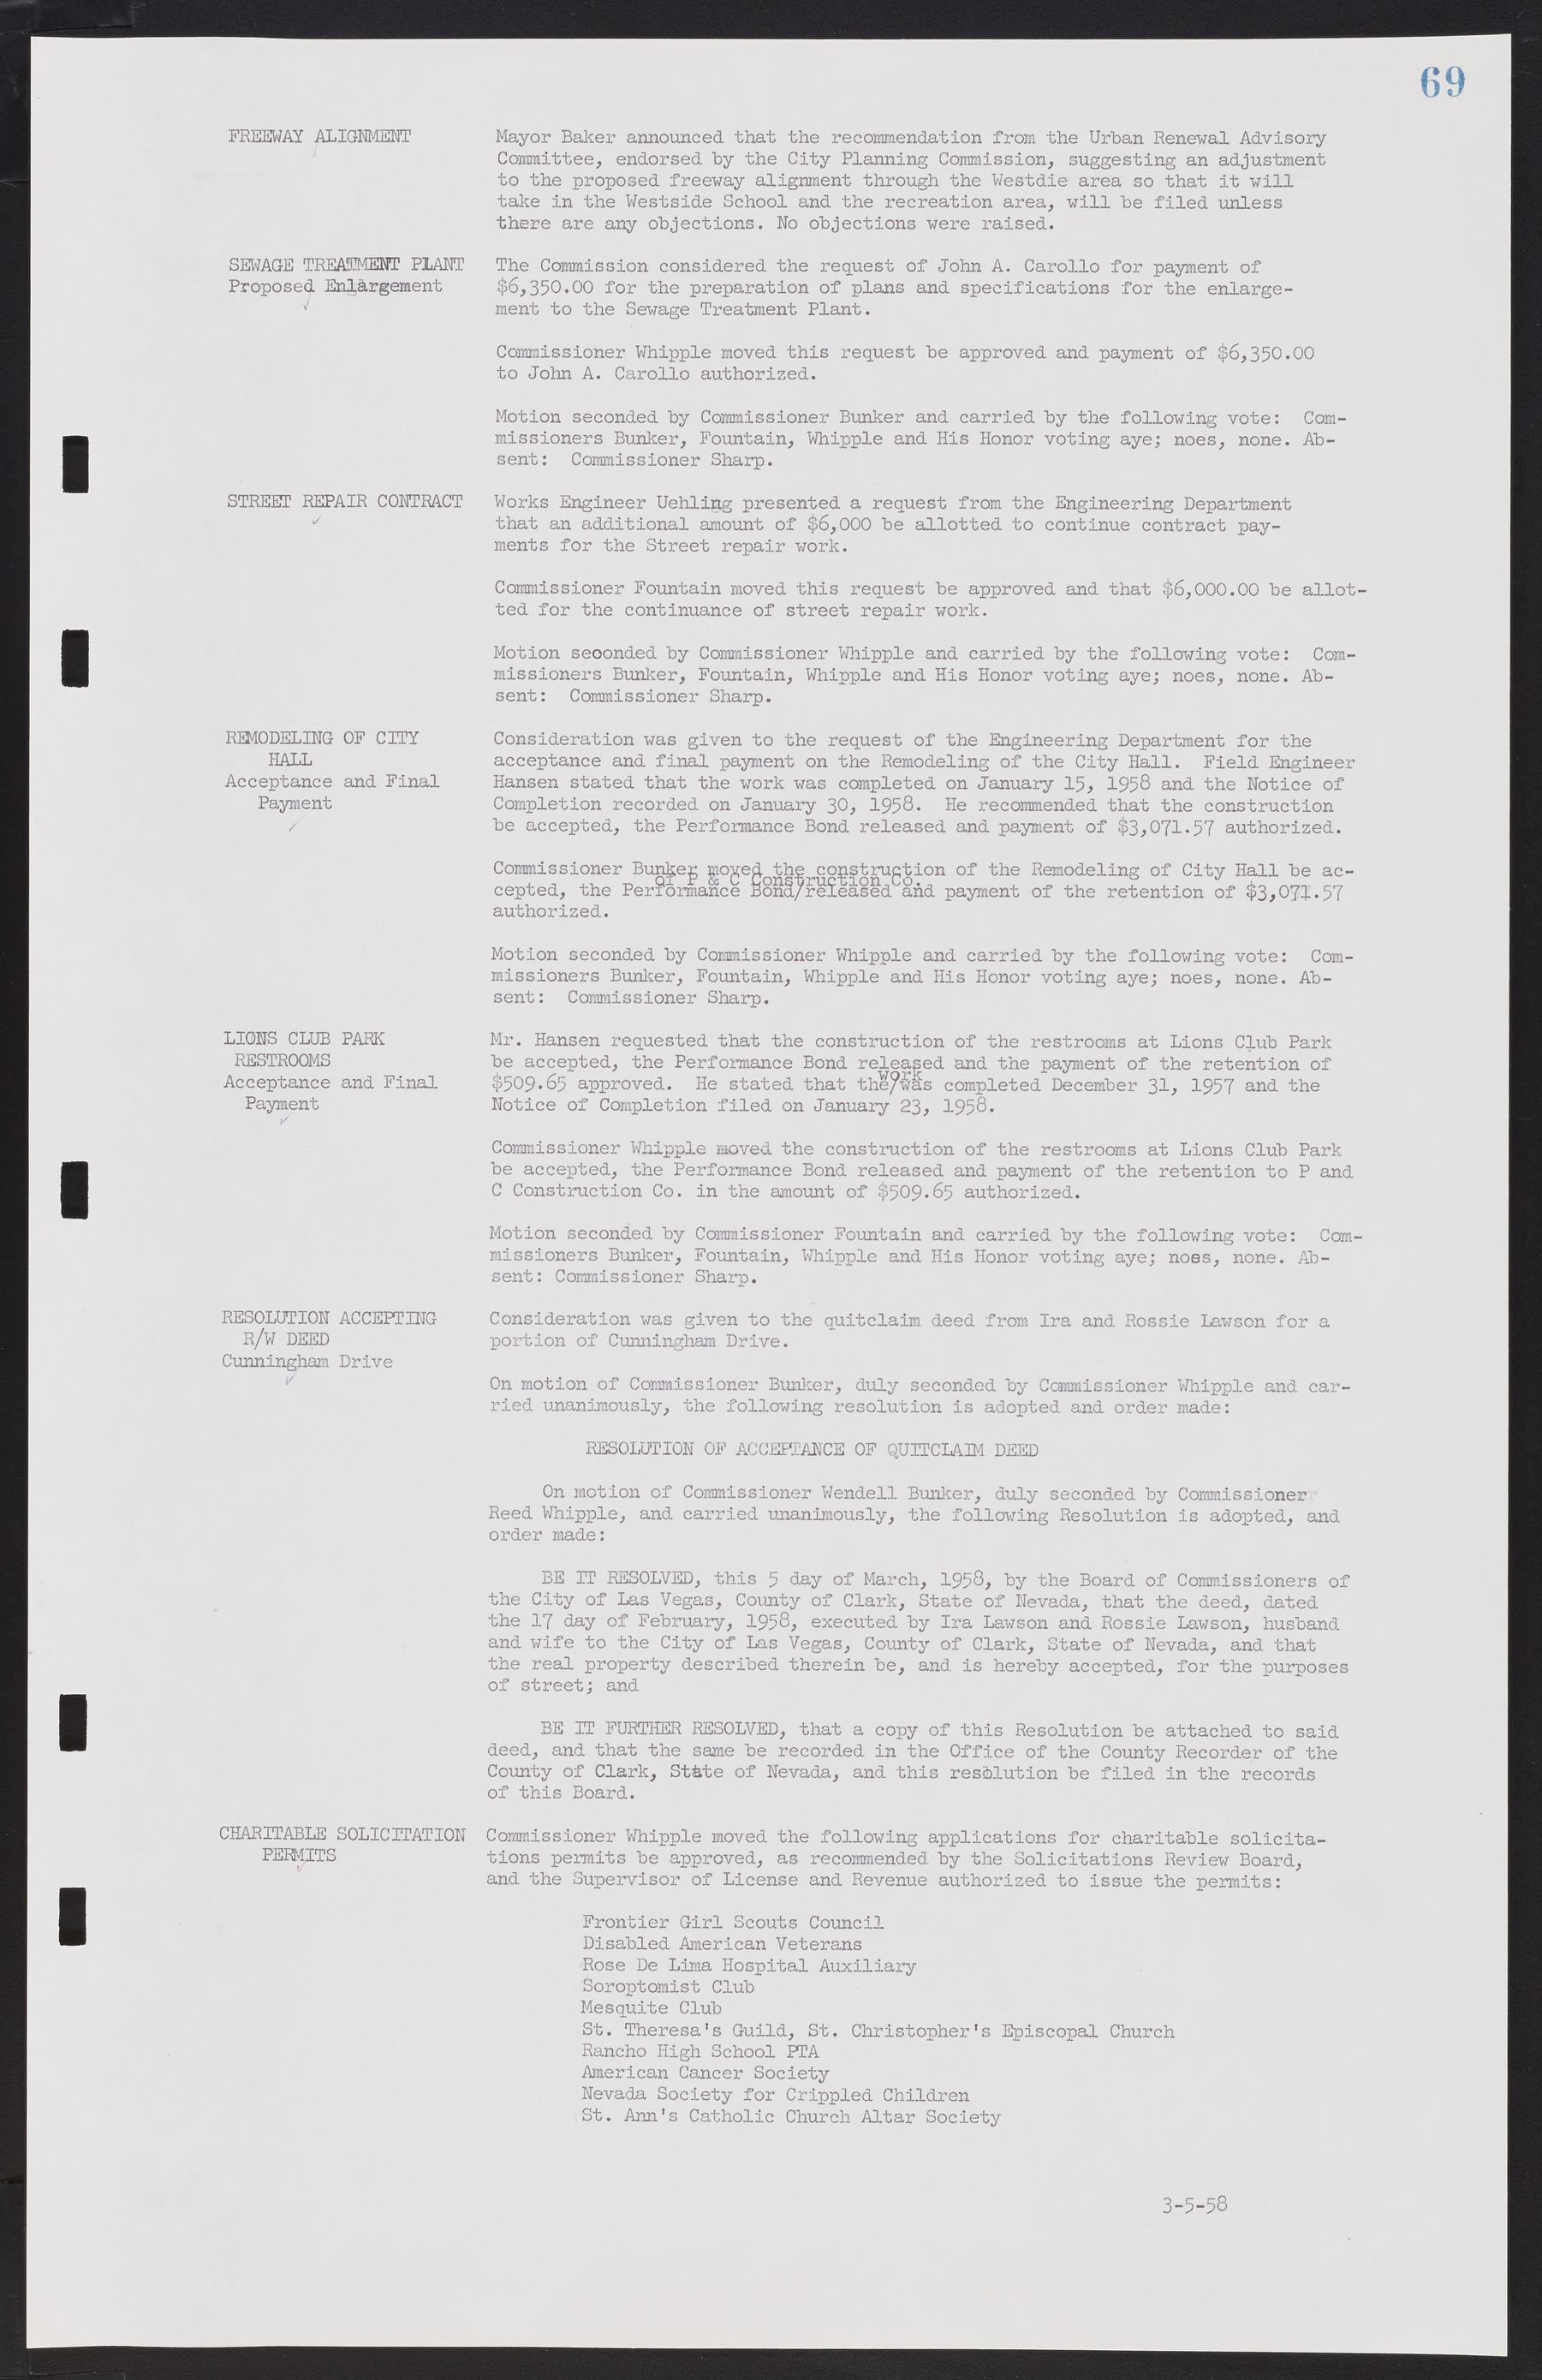 Las Vegas City Commission Minutes, November 20, 1957 to December 2, 1959, lvc000011-73